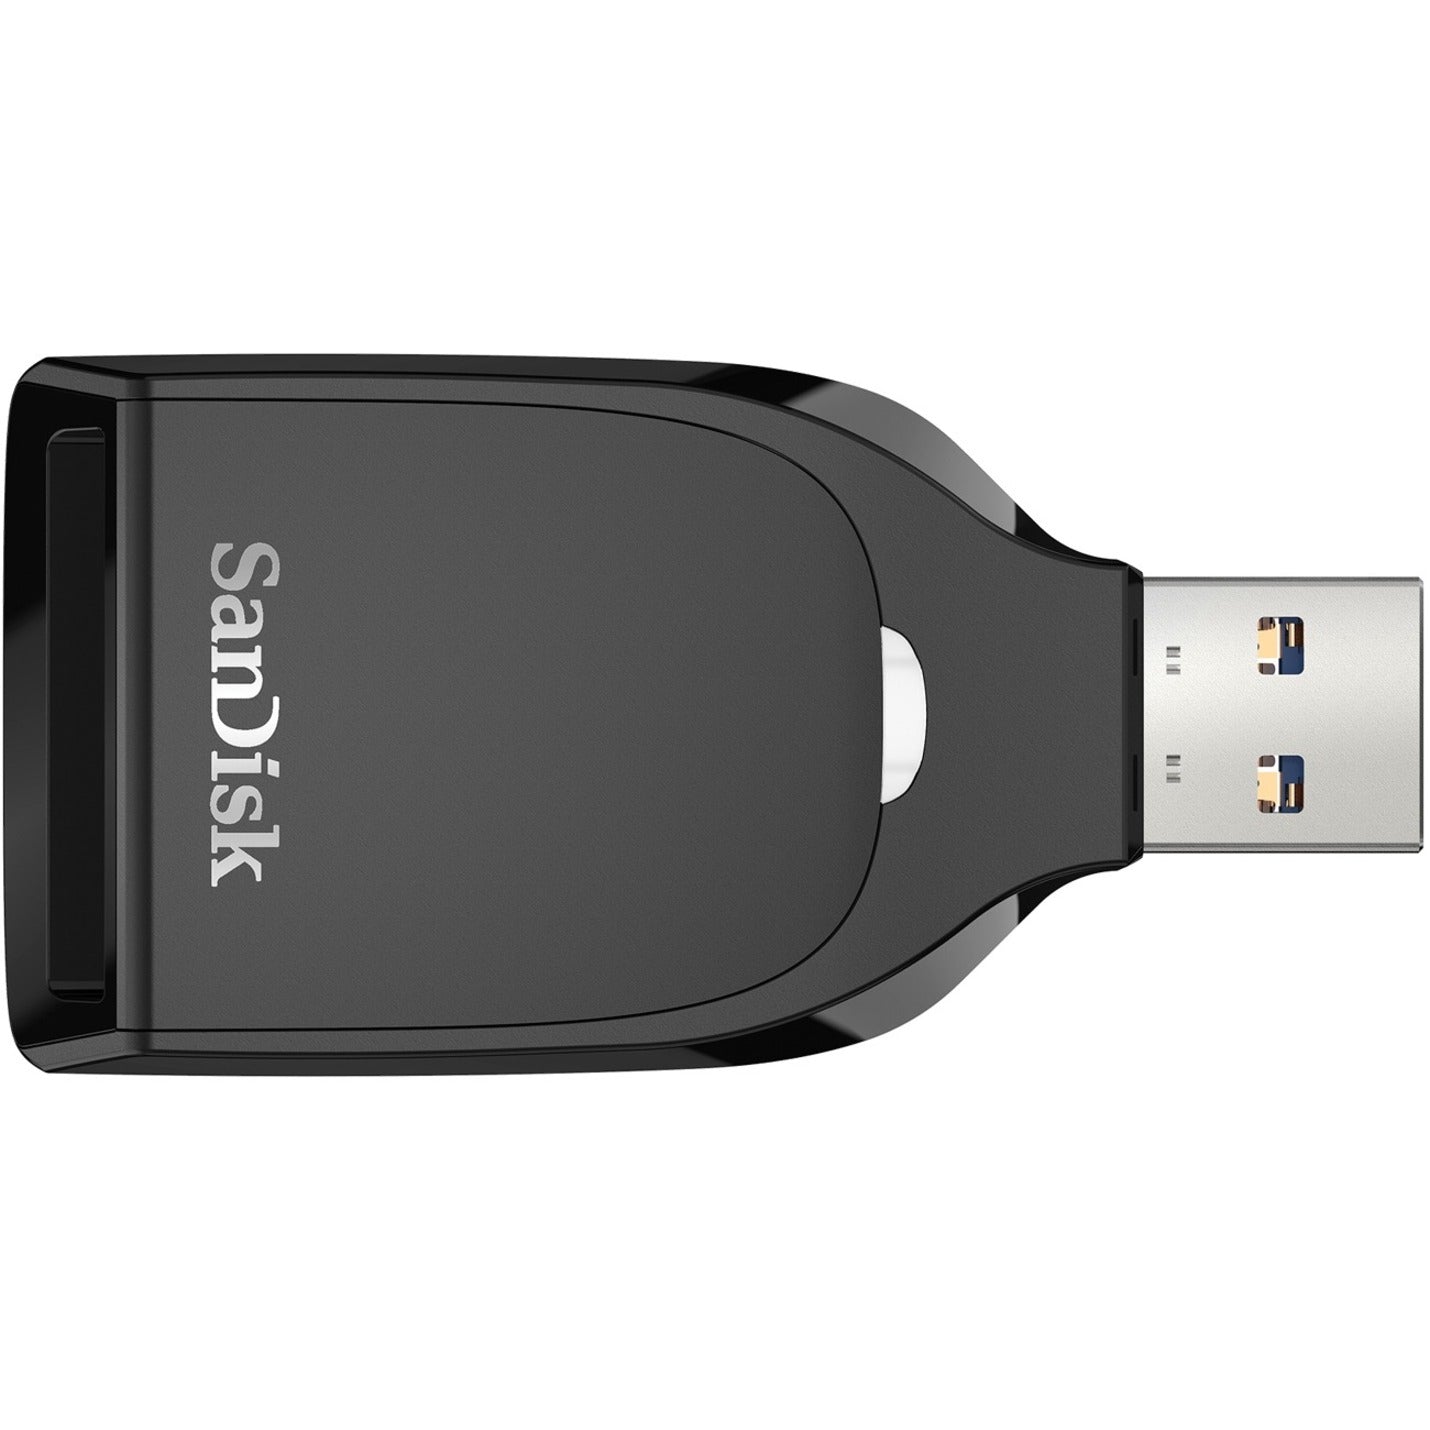 SanDisk SDDR-C531-ANANN SD UHS-I Card Reader, USB 3.0 Type A, 2 Year Warranty, China Origin